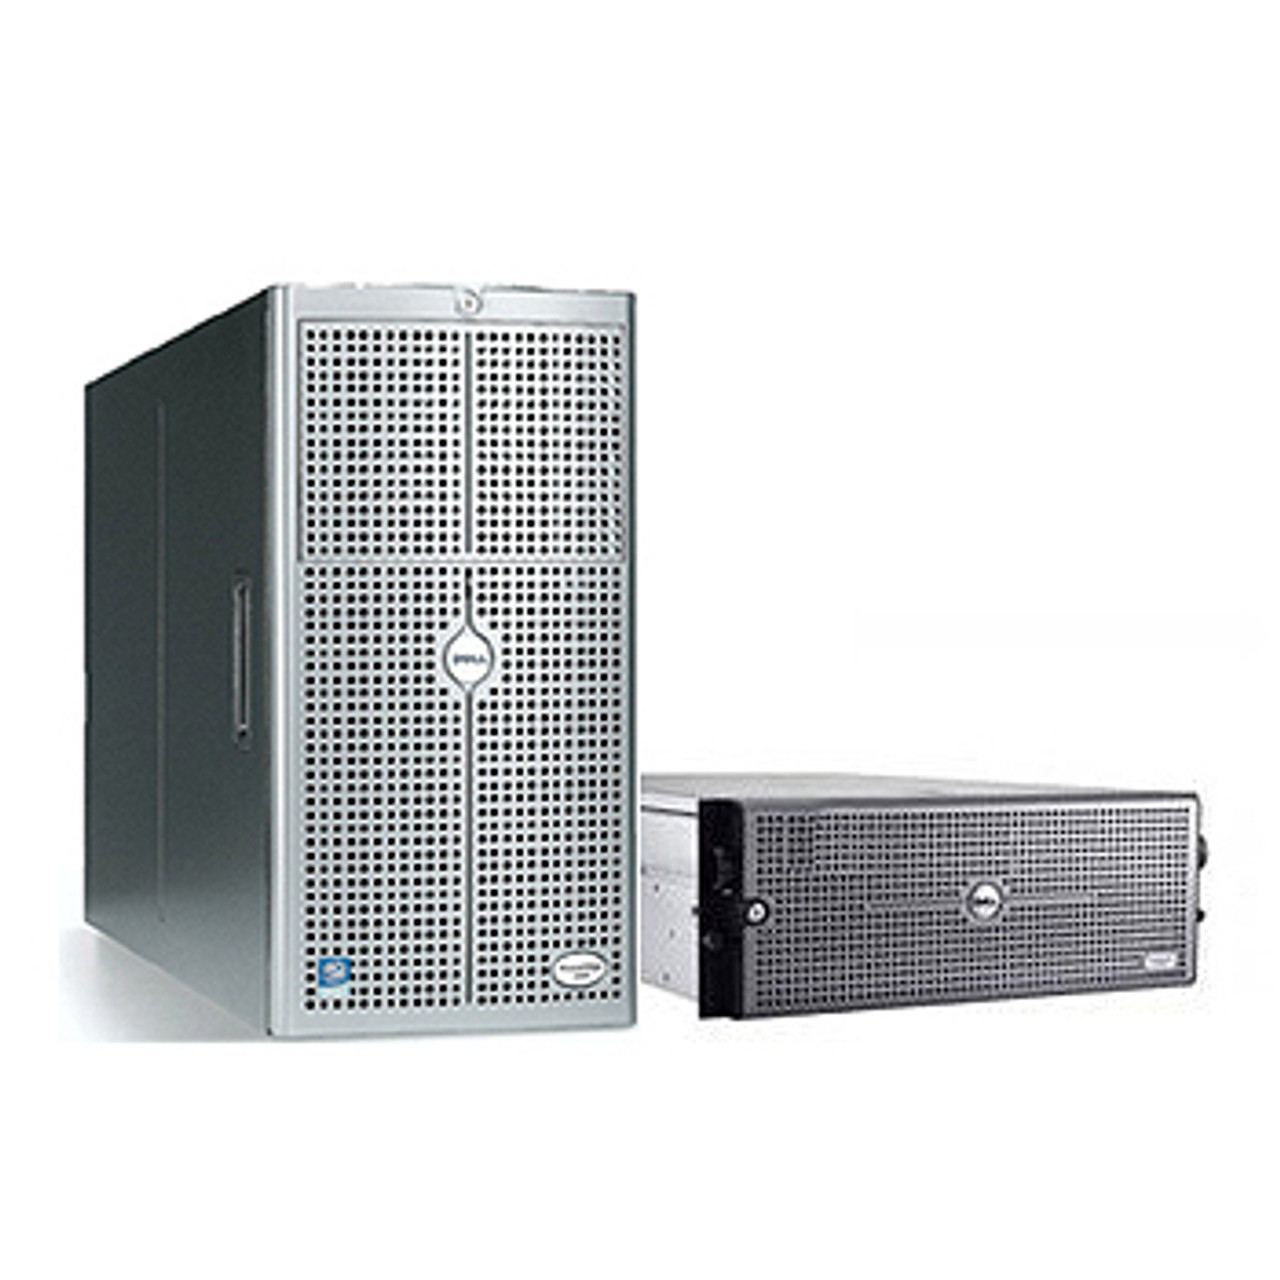 Dell PowerEdge Gen8 Tower Servers